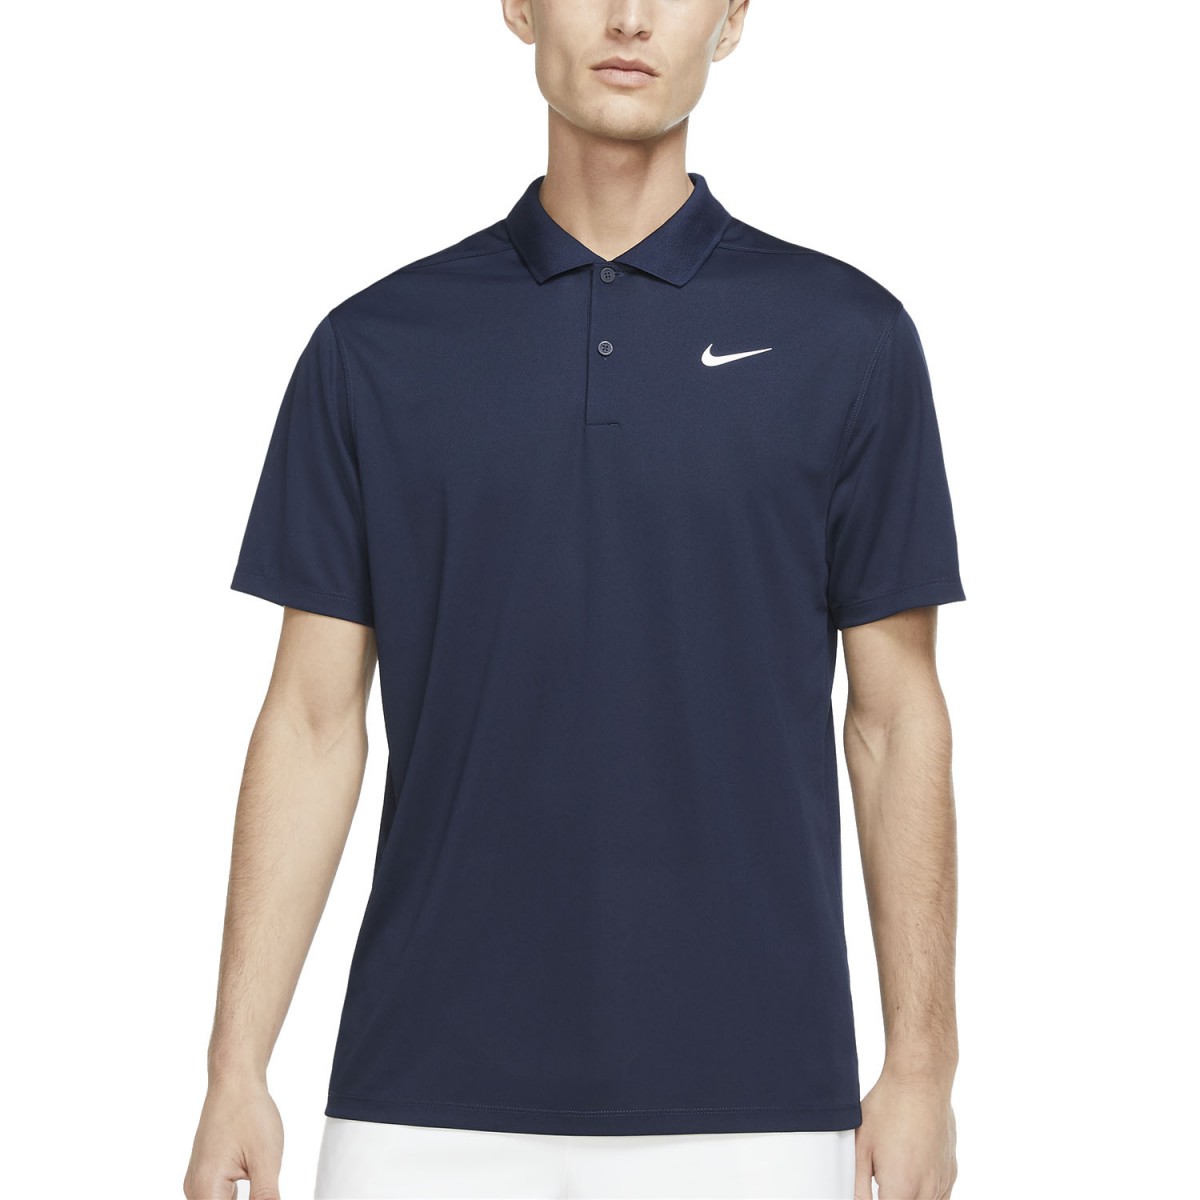 Теннисная футболка мужская Nike Core Pique Polo obsidian/white